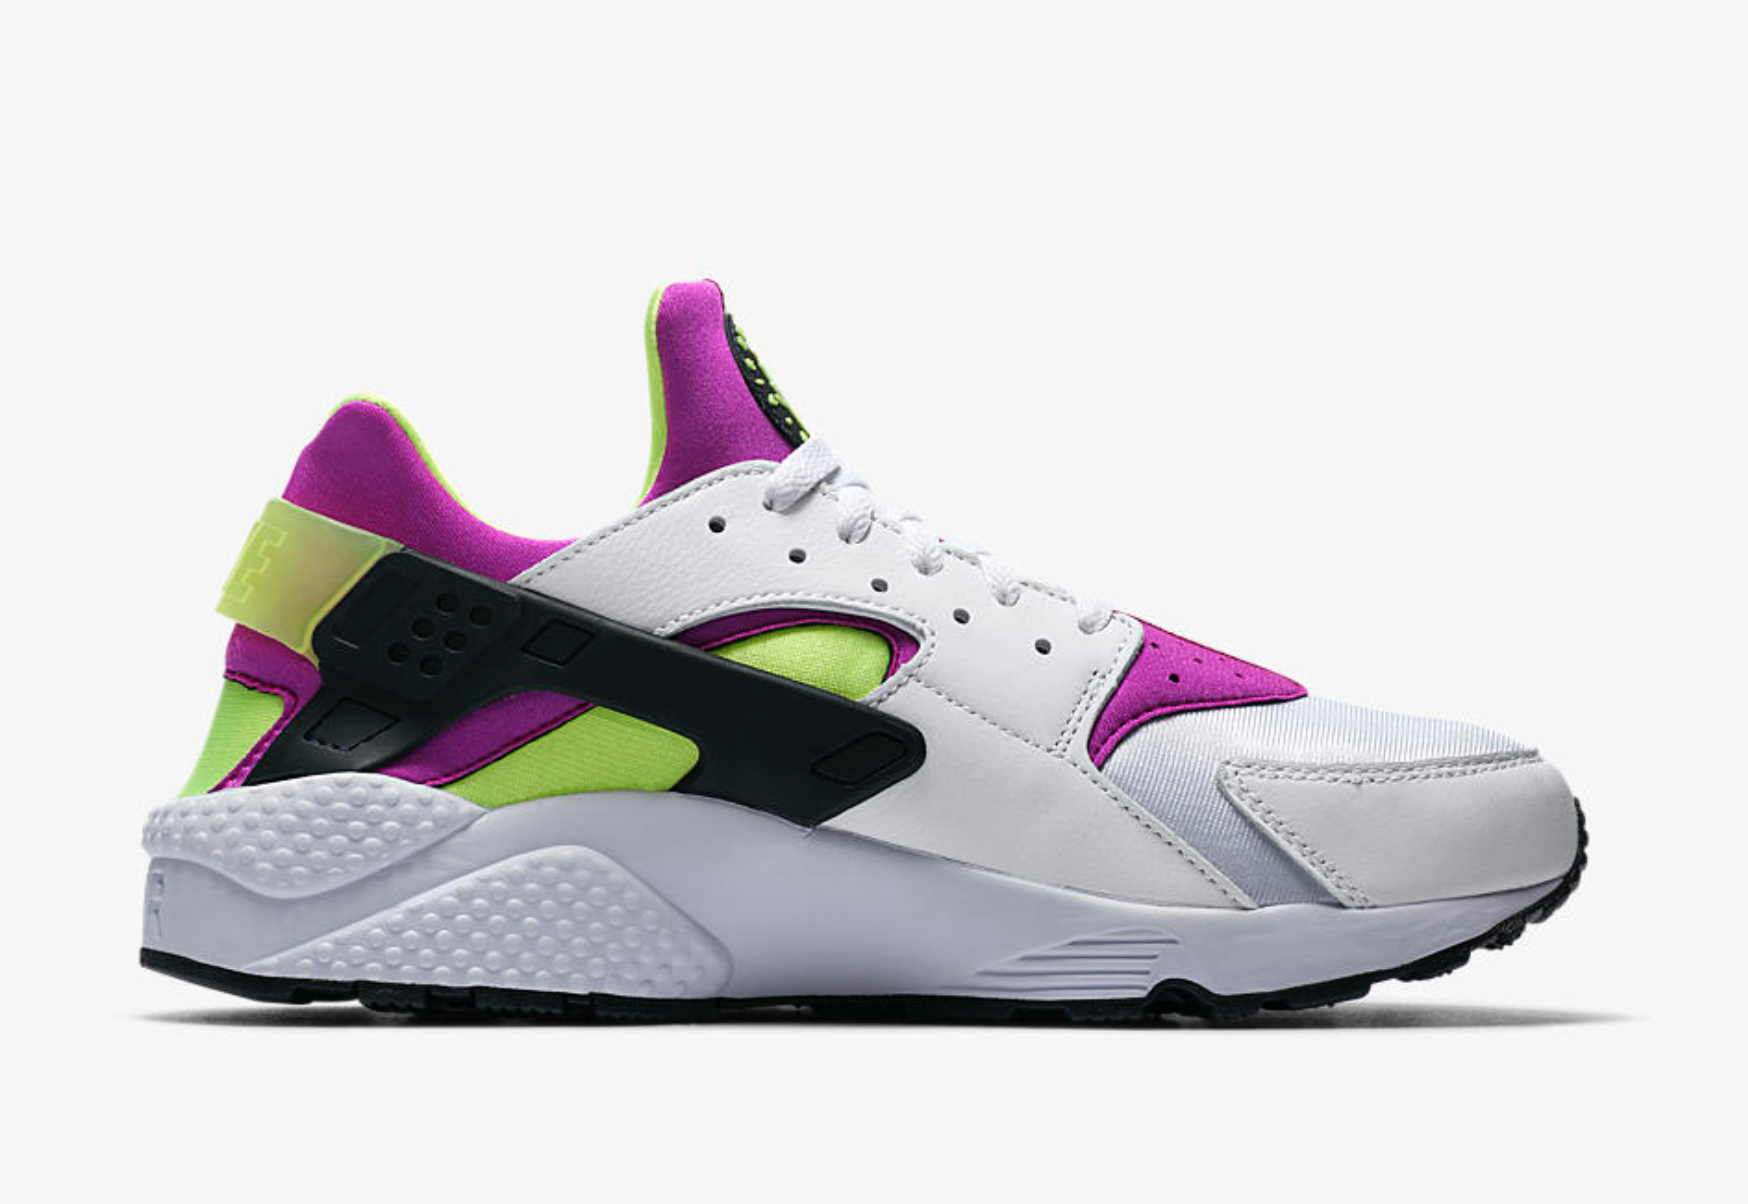 Nike Brings Back The Voltage Purple Hot Lime “Magenta” Huarache Runner ...